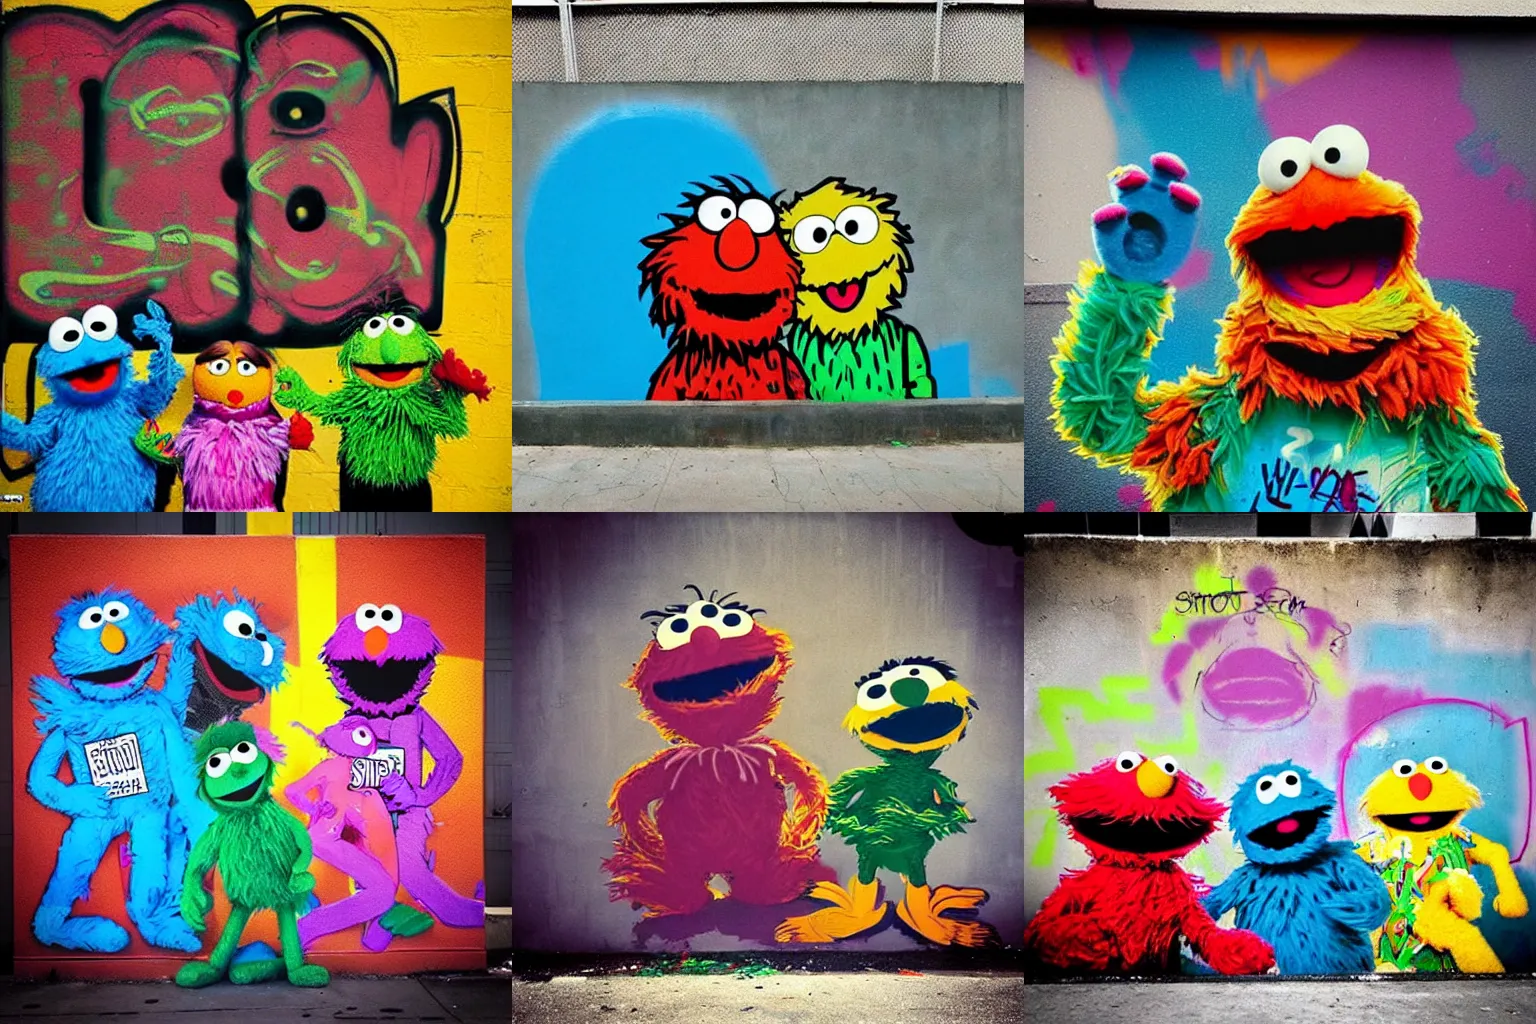 Prompt: “Sesame Street as LA street gang, 90s, rough, style street art, graffiti, spray paint”